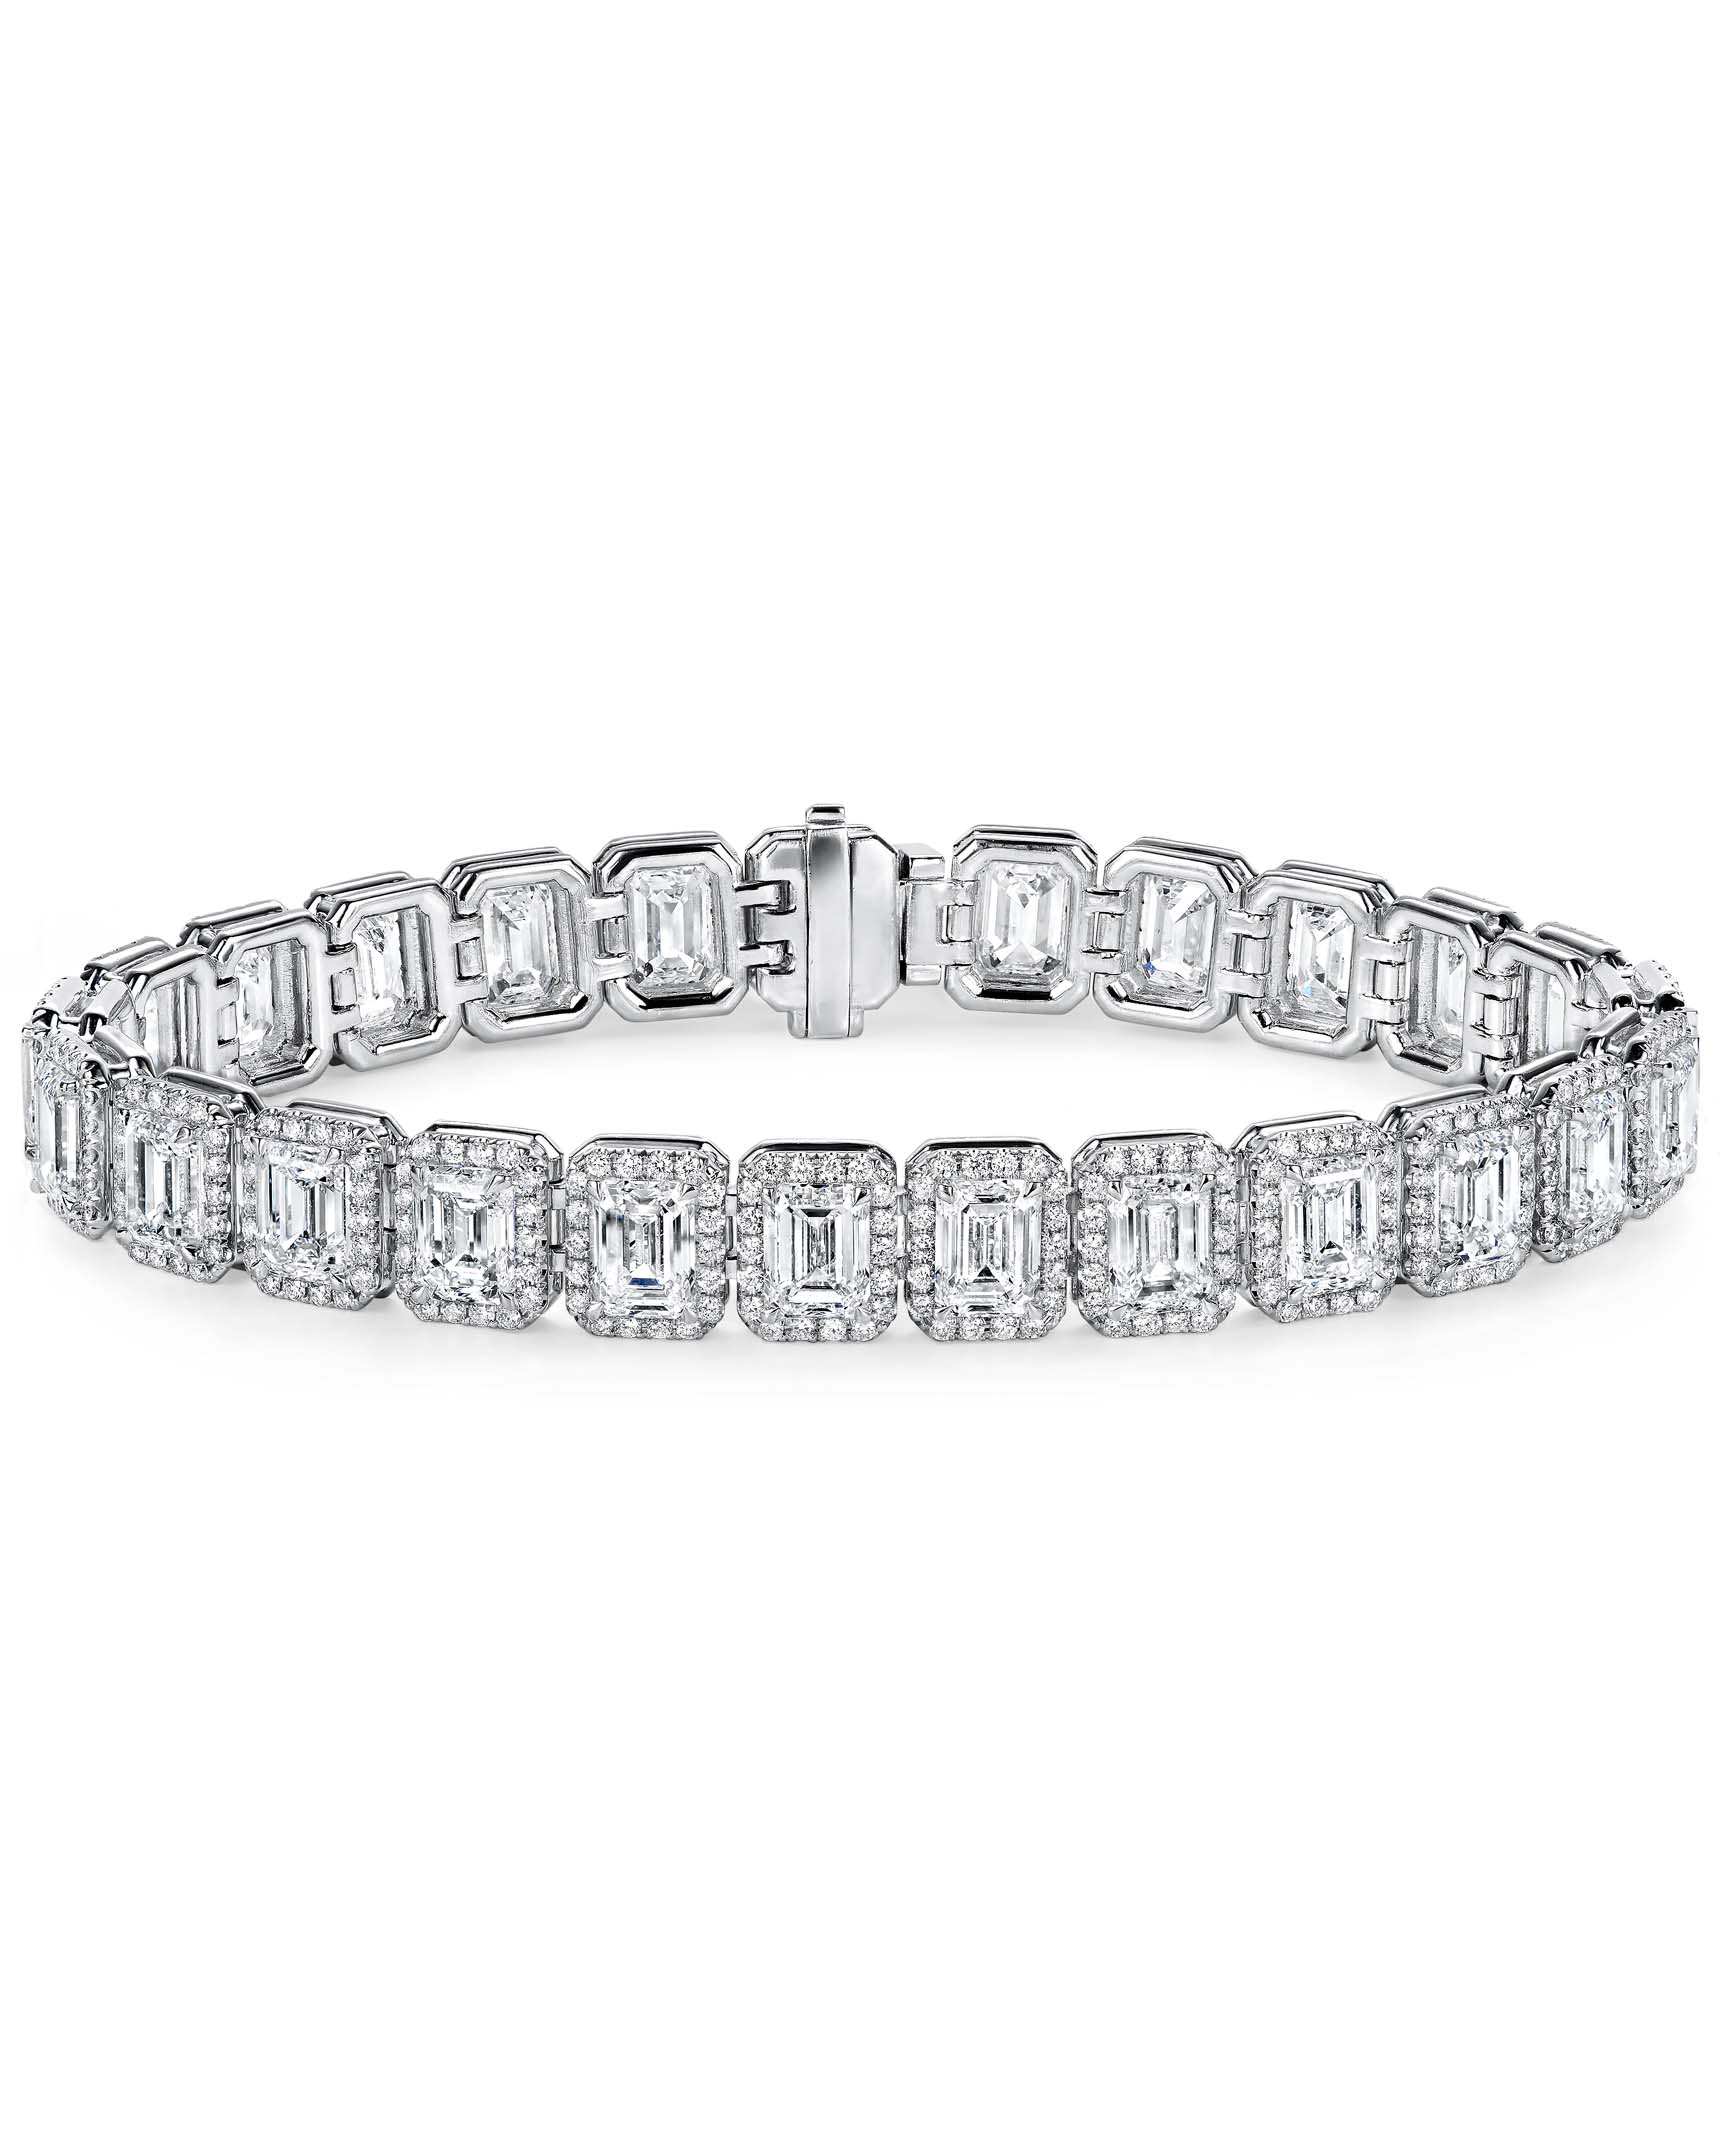 Exceptional Platinum Emerald-Cut Diamond Bracelet - Turgeon Raine